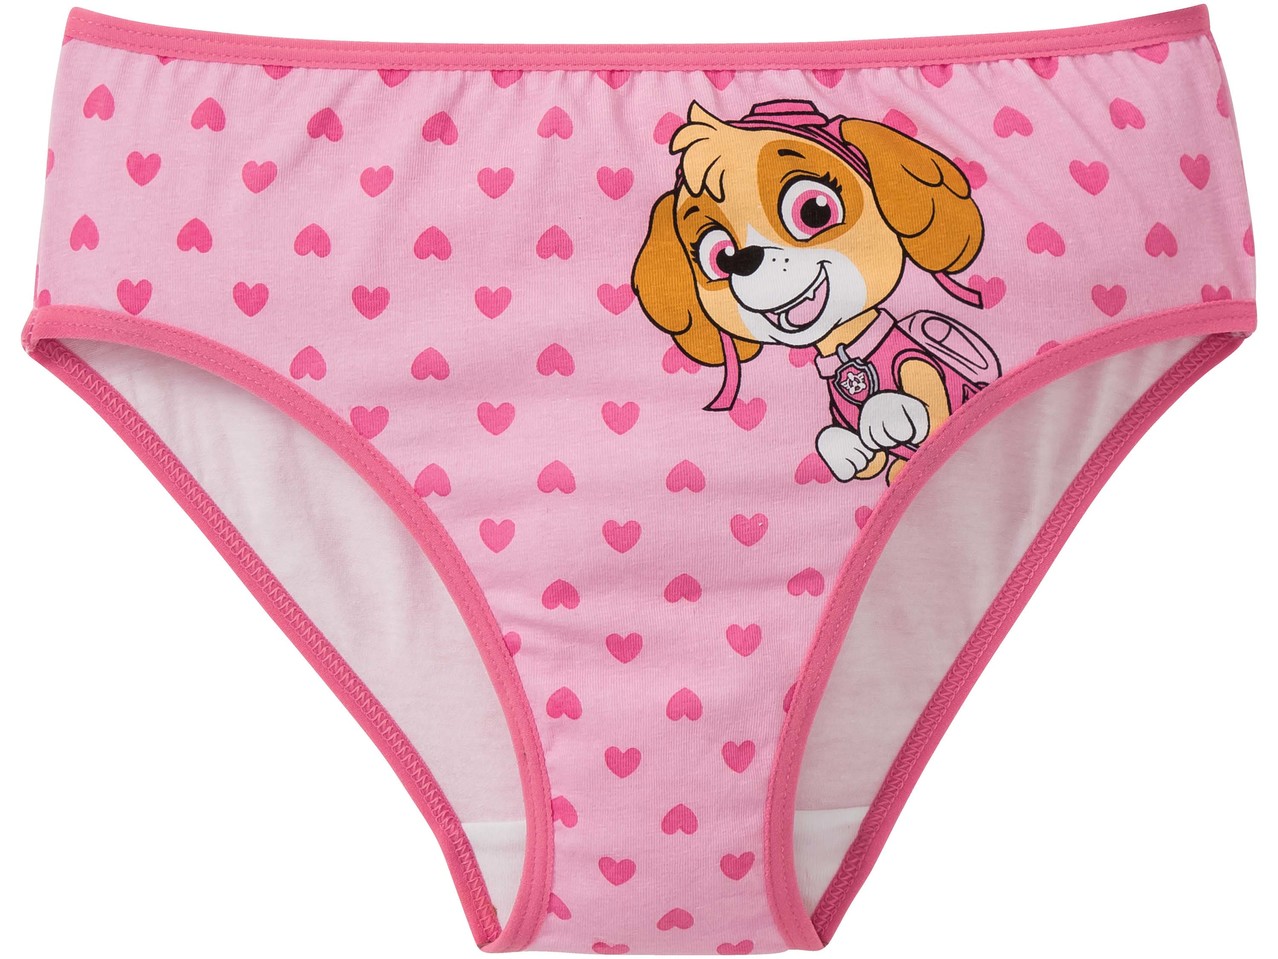 Kids' Character Underwear Set